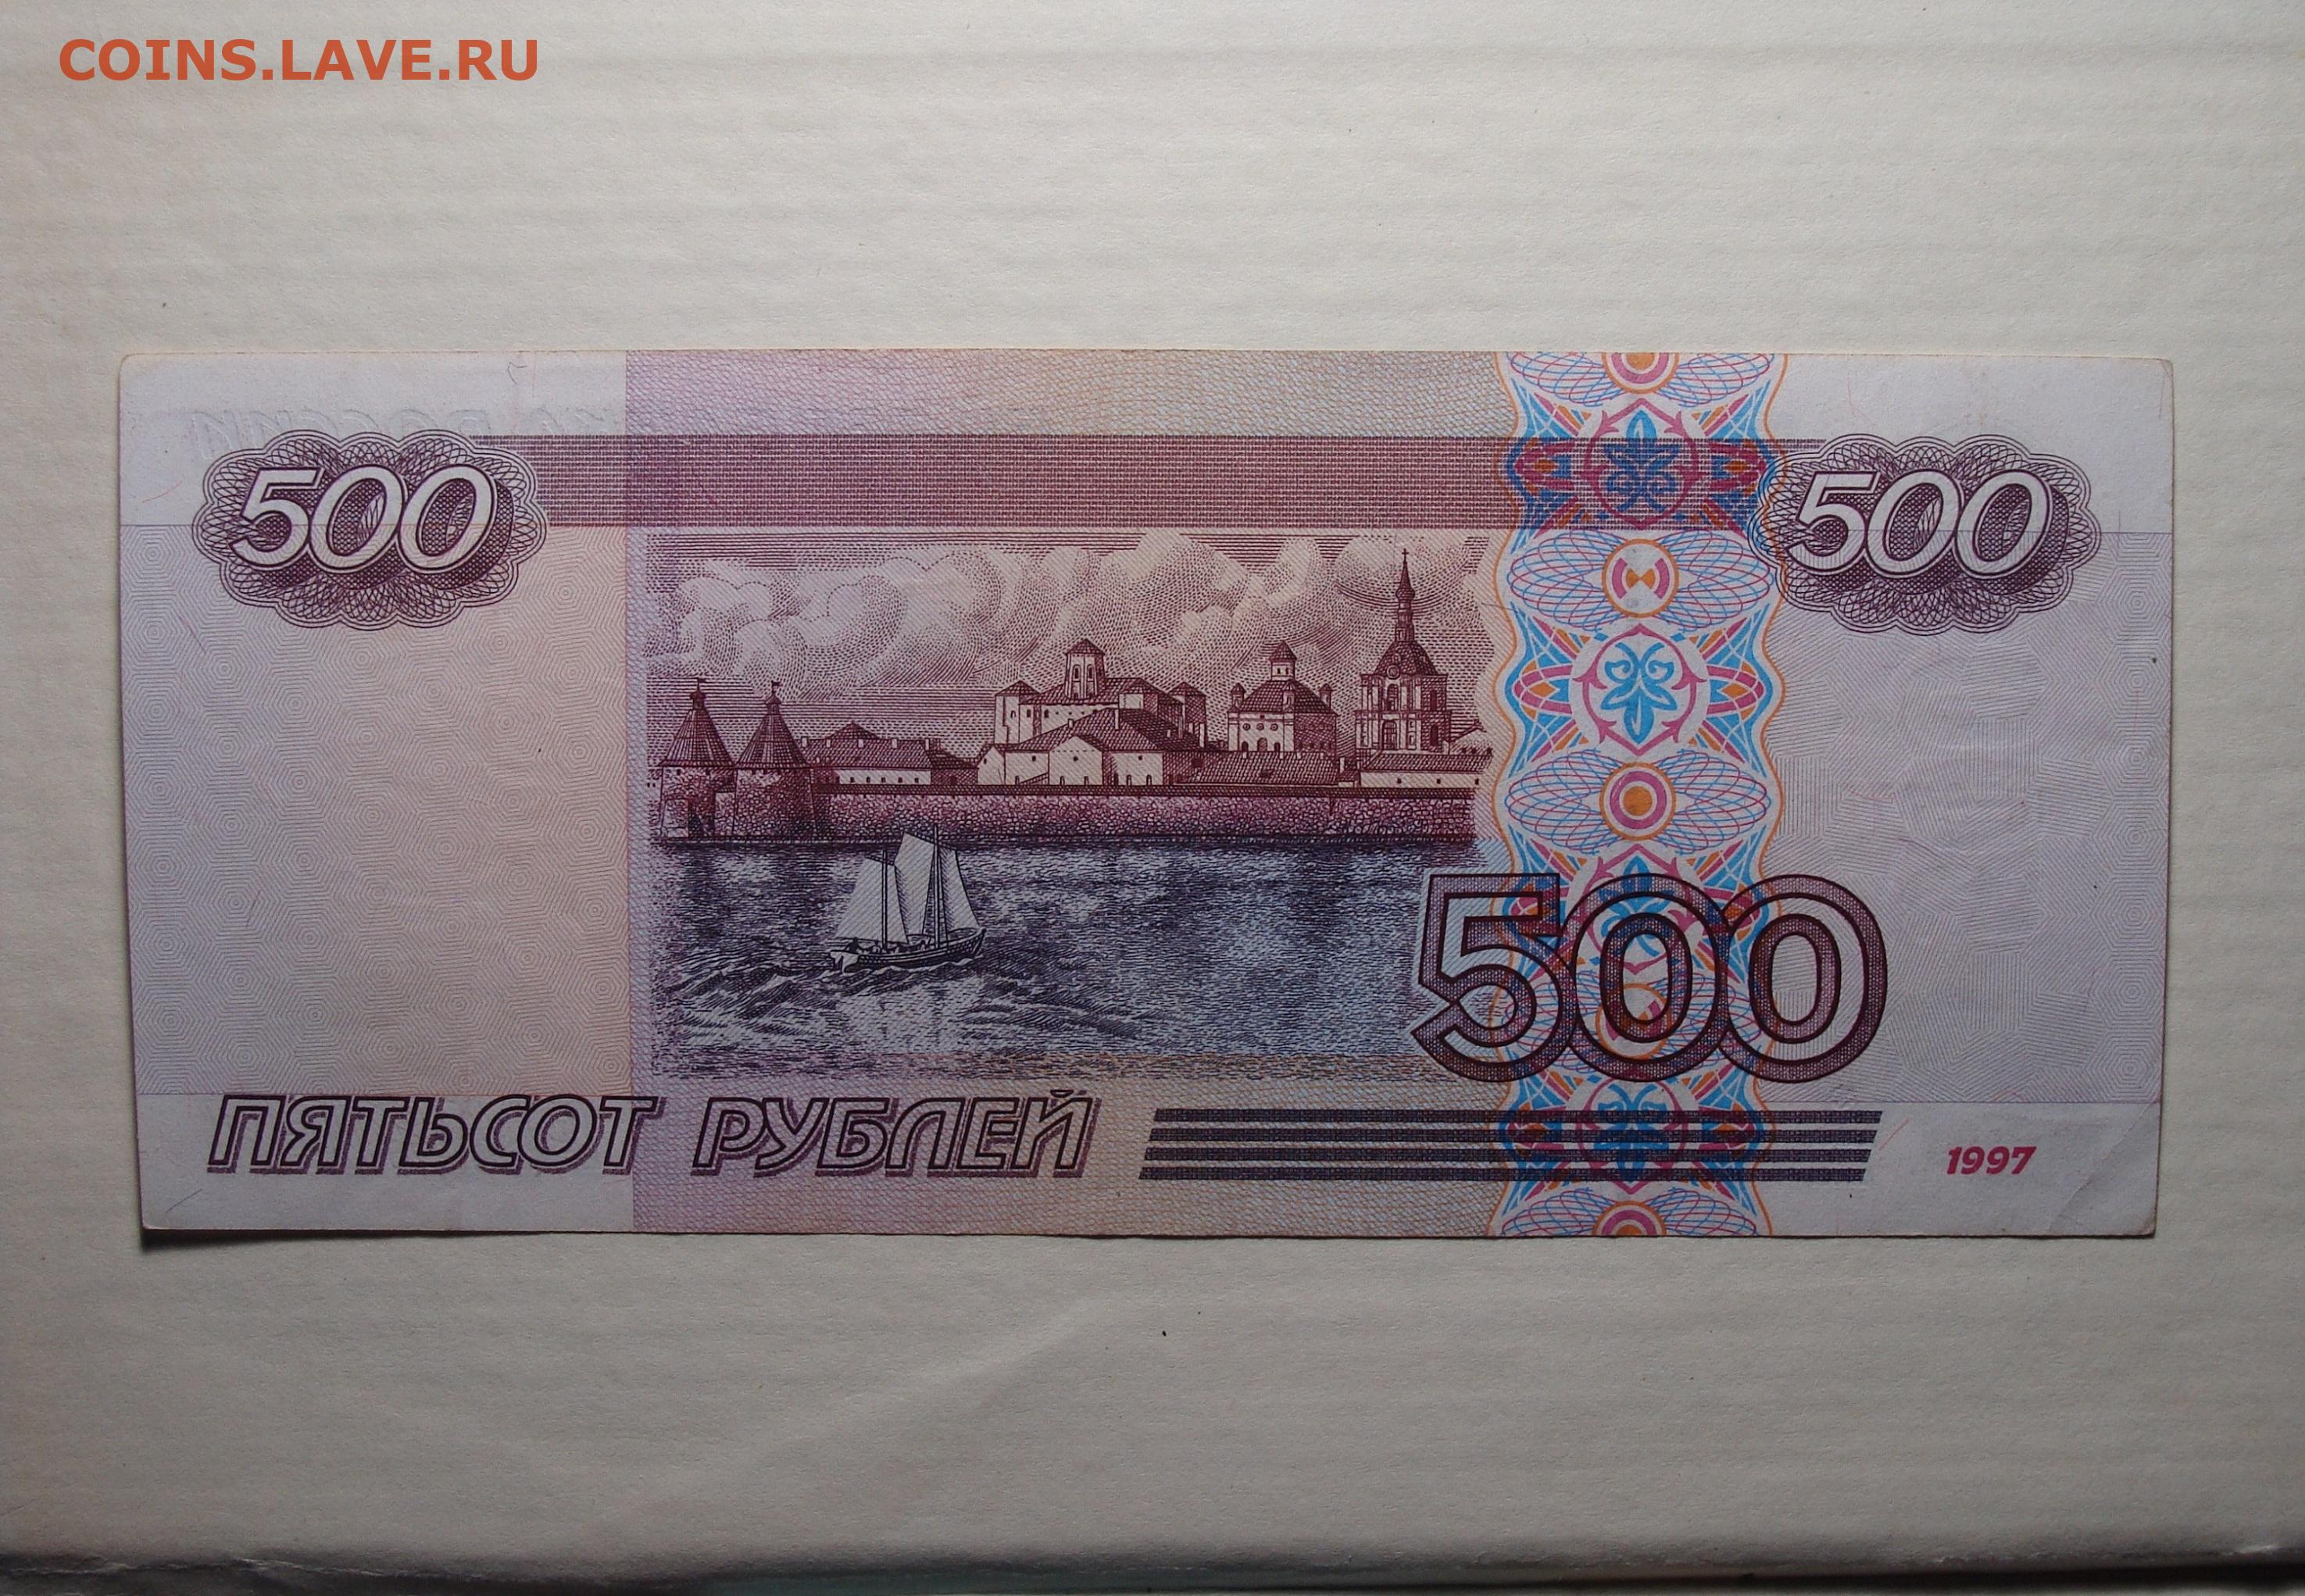 26 500 рублей. 500 Рублей 1997 г. модификация 2001 г. 500 Рублей 2001 года модификации. 500 Рублей 1997 года модификация 2001. 500 Рублей 1997 года.